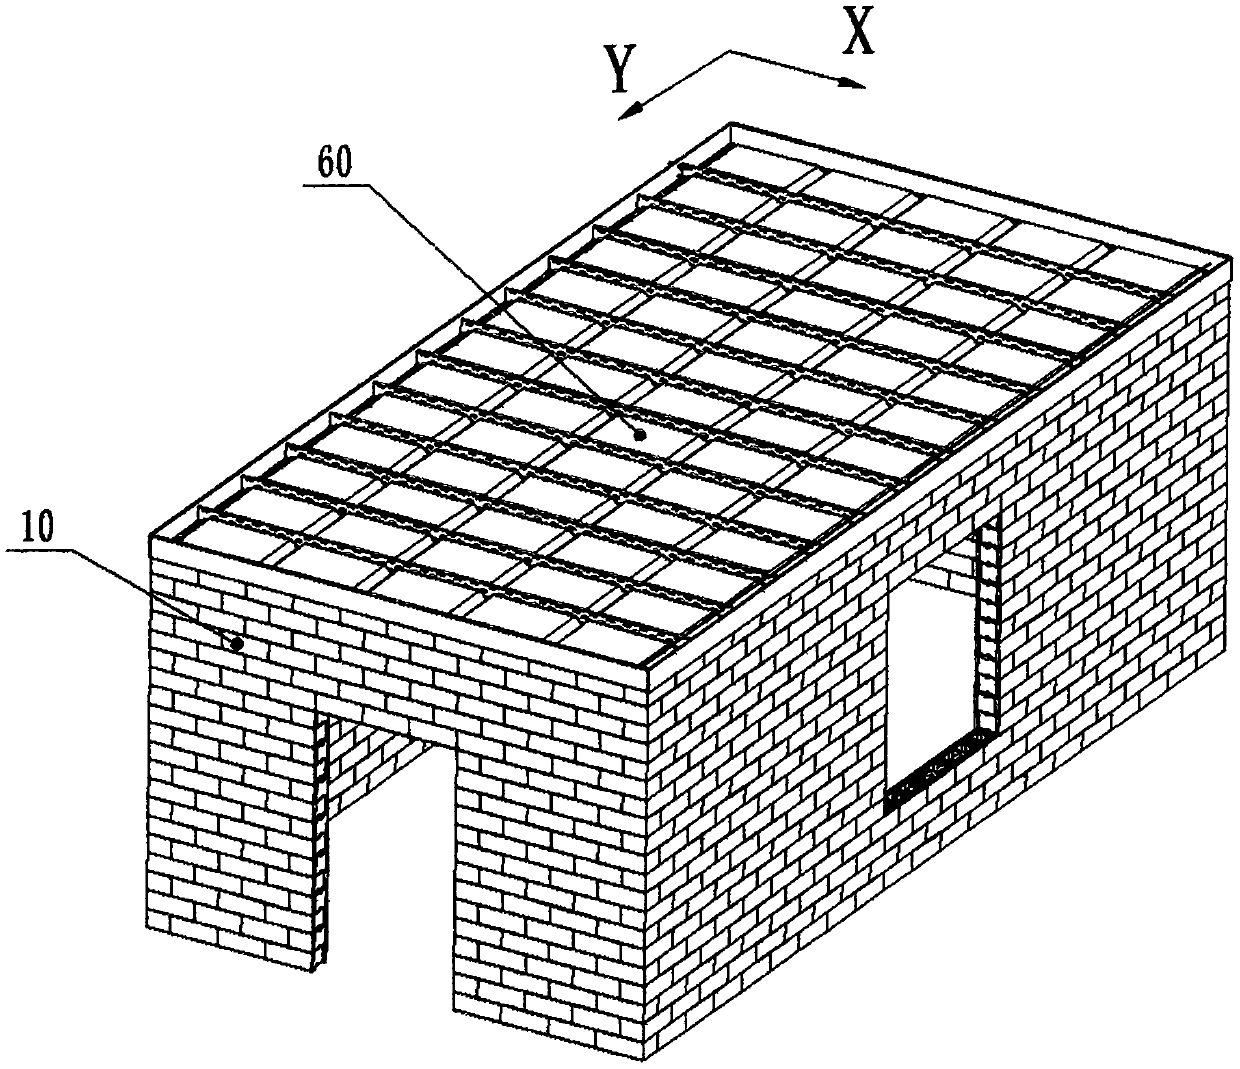 Novel building assembly structure